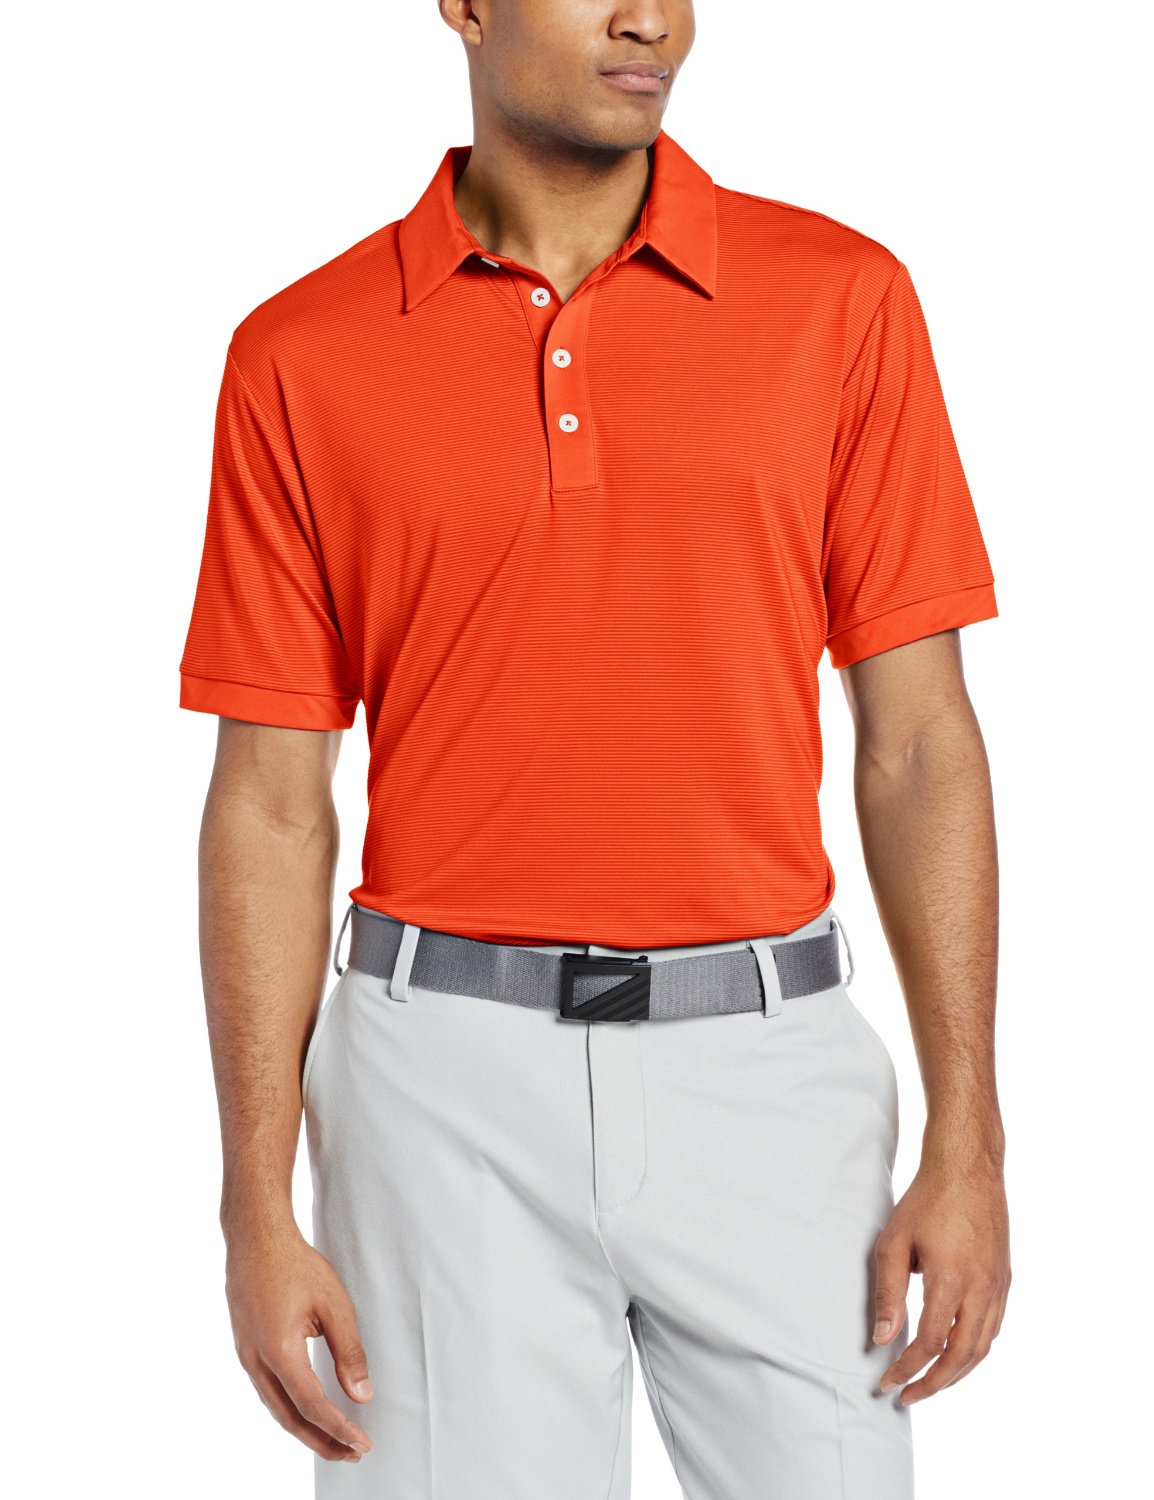 adidas climalite golf shirts